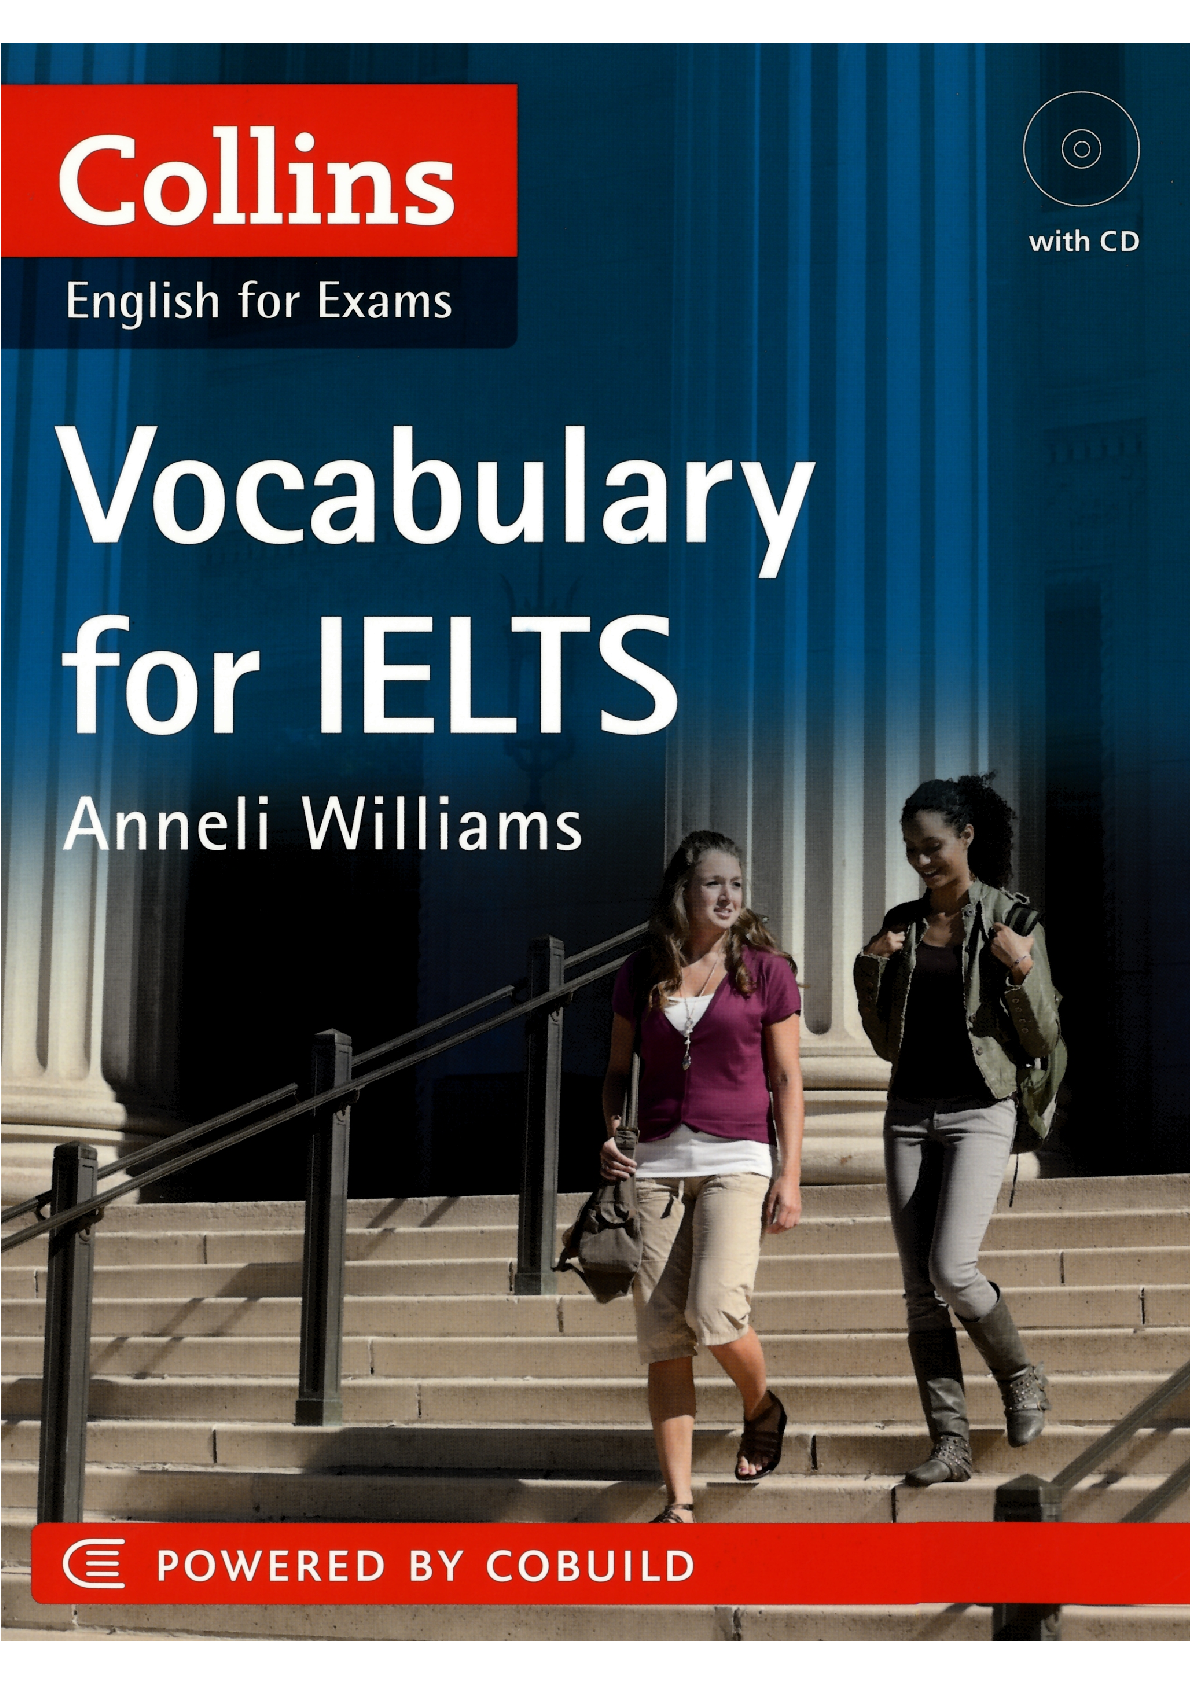 Sách Collins Vocabulary for IELTS pdf | Xem online, tải PDF miễn phí (trang 1)